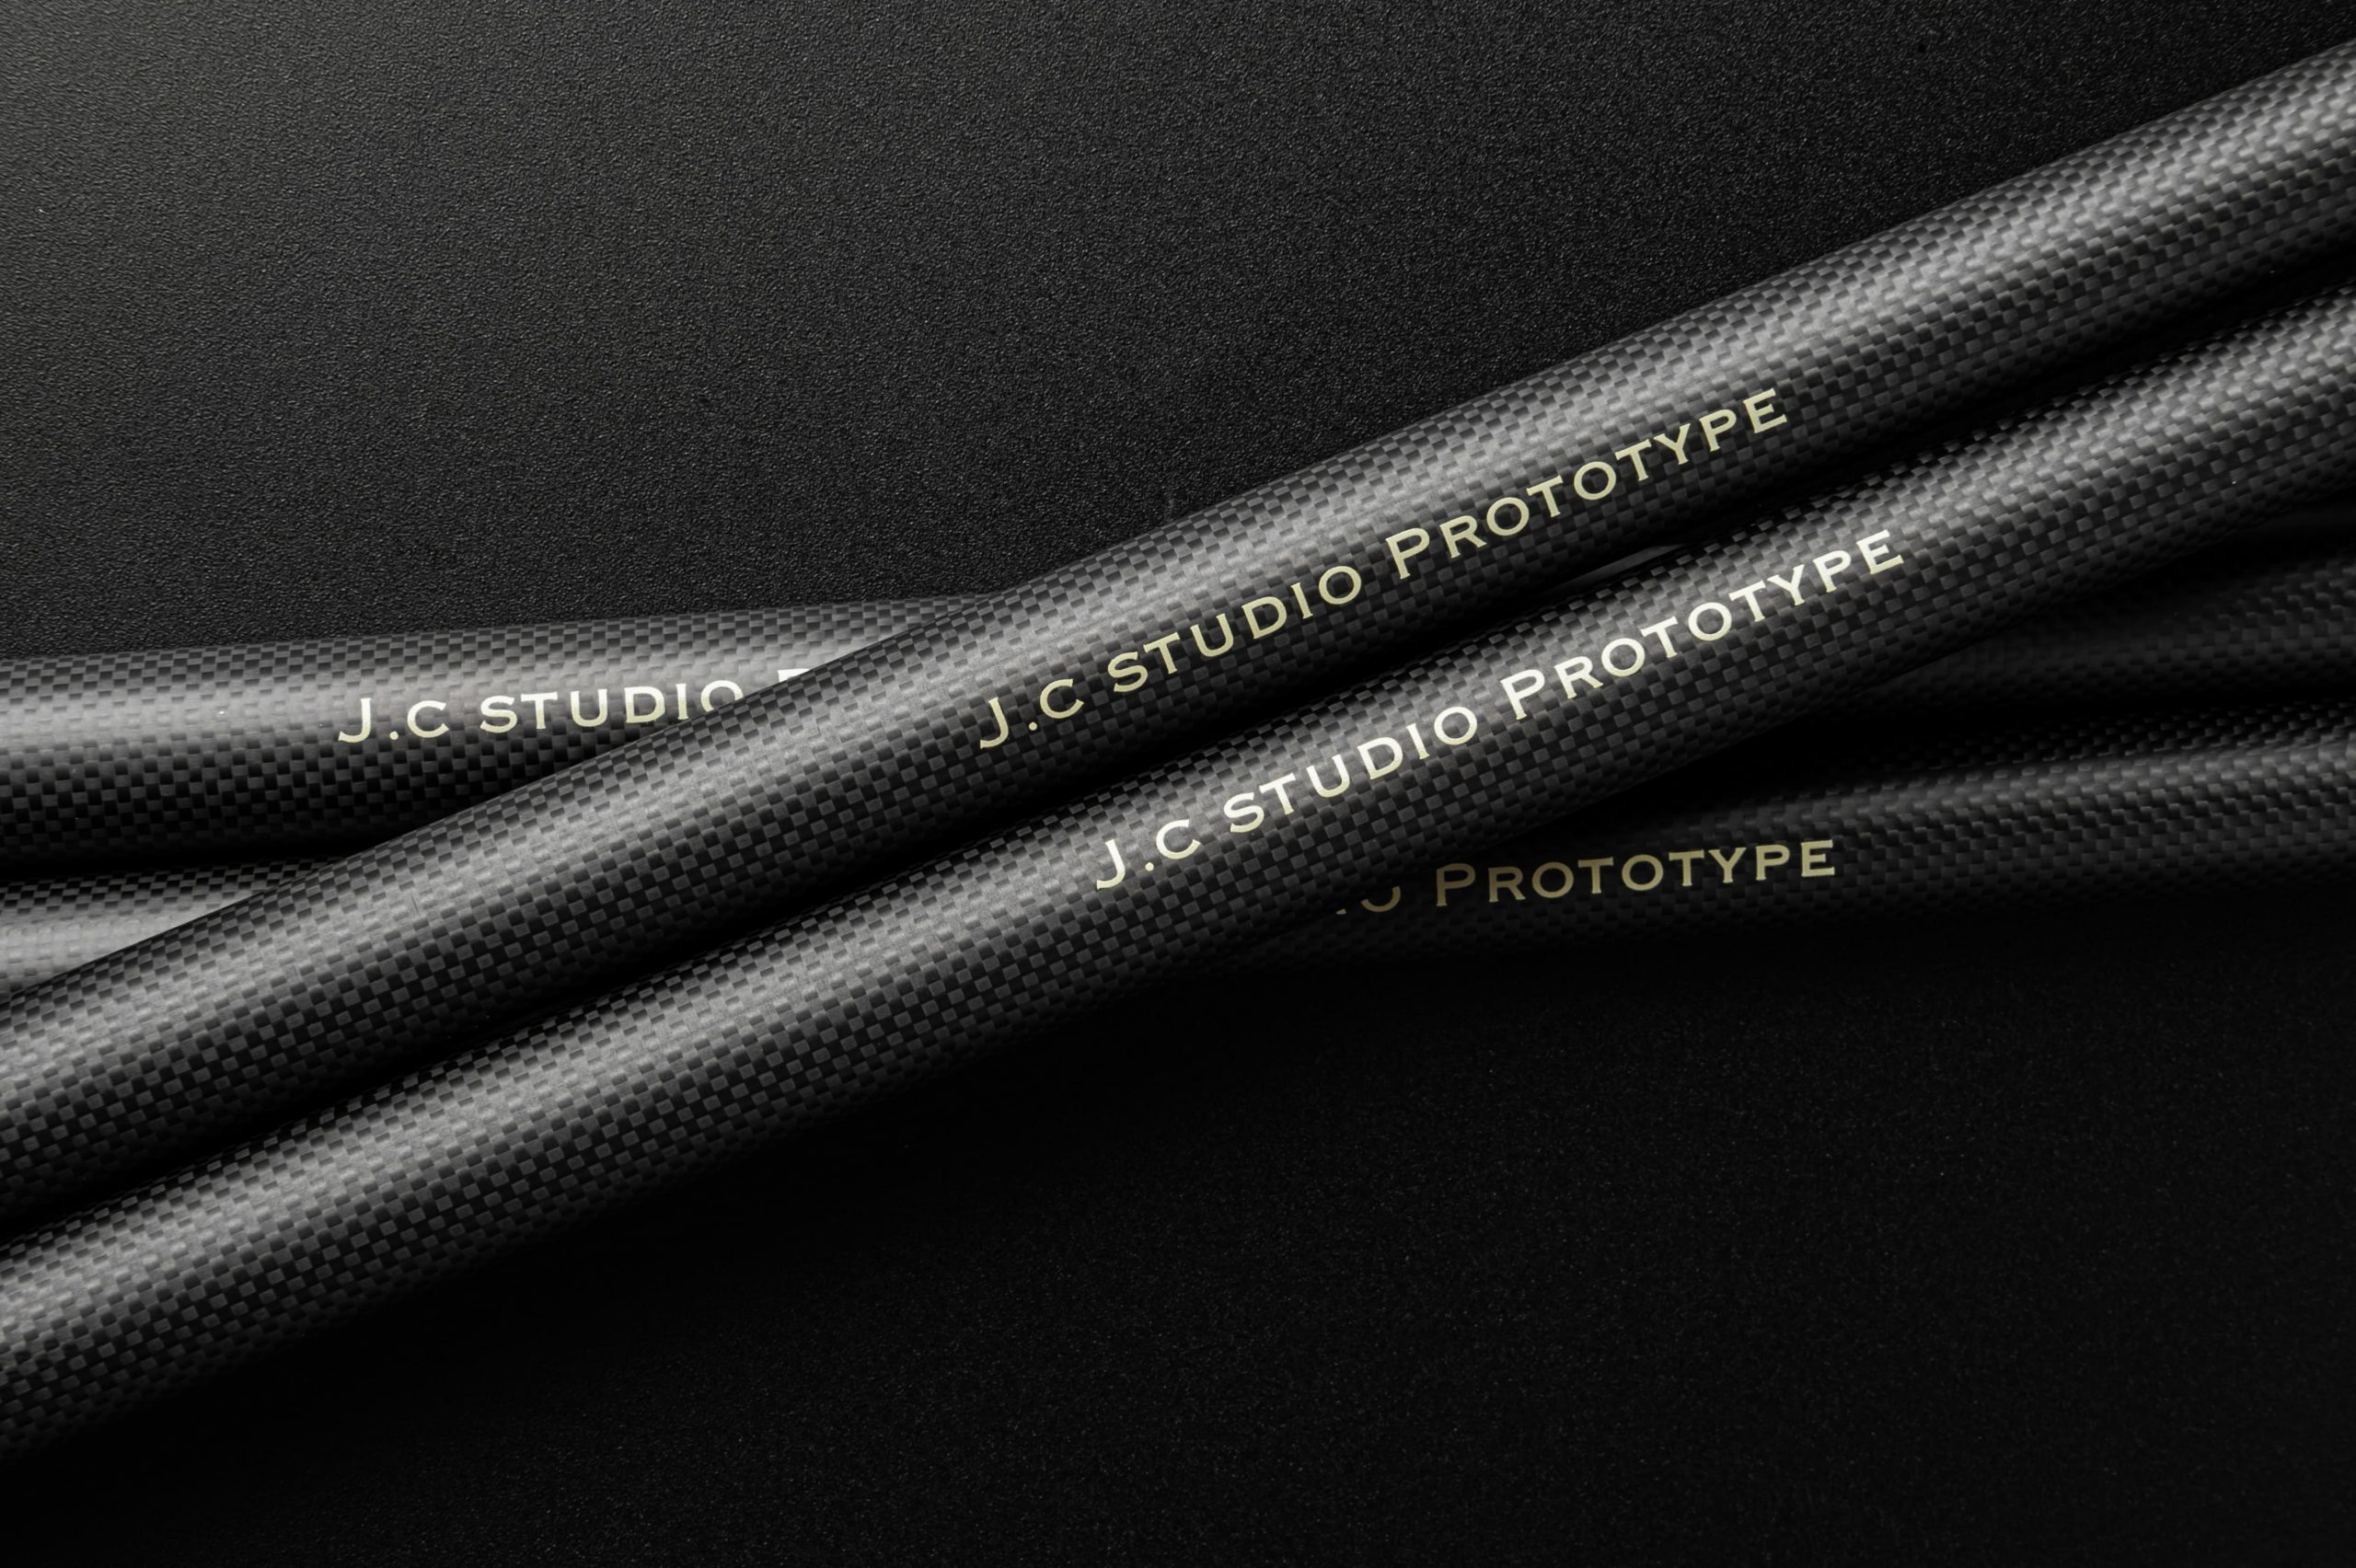 J.C studio Prototype 限量高性能科技桿身